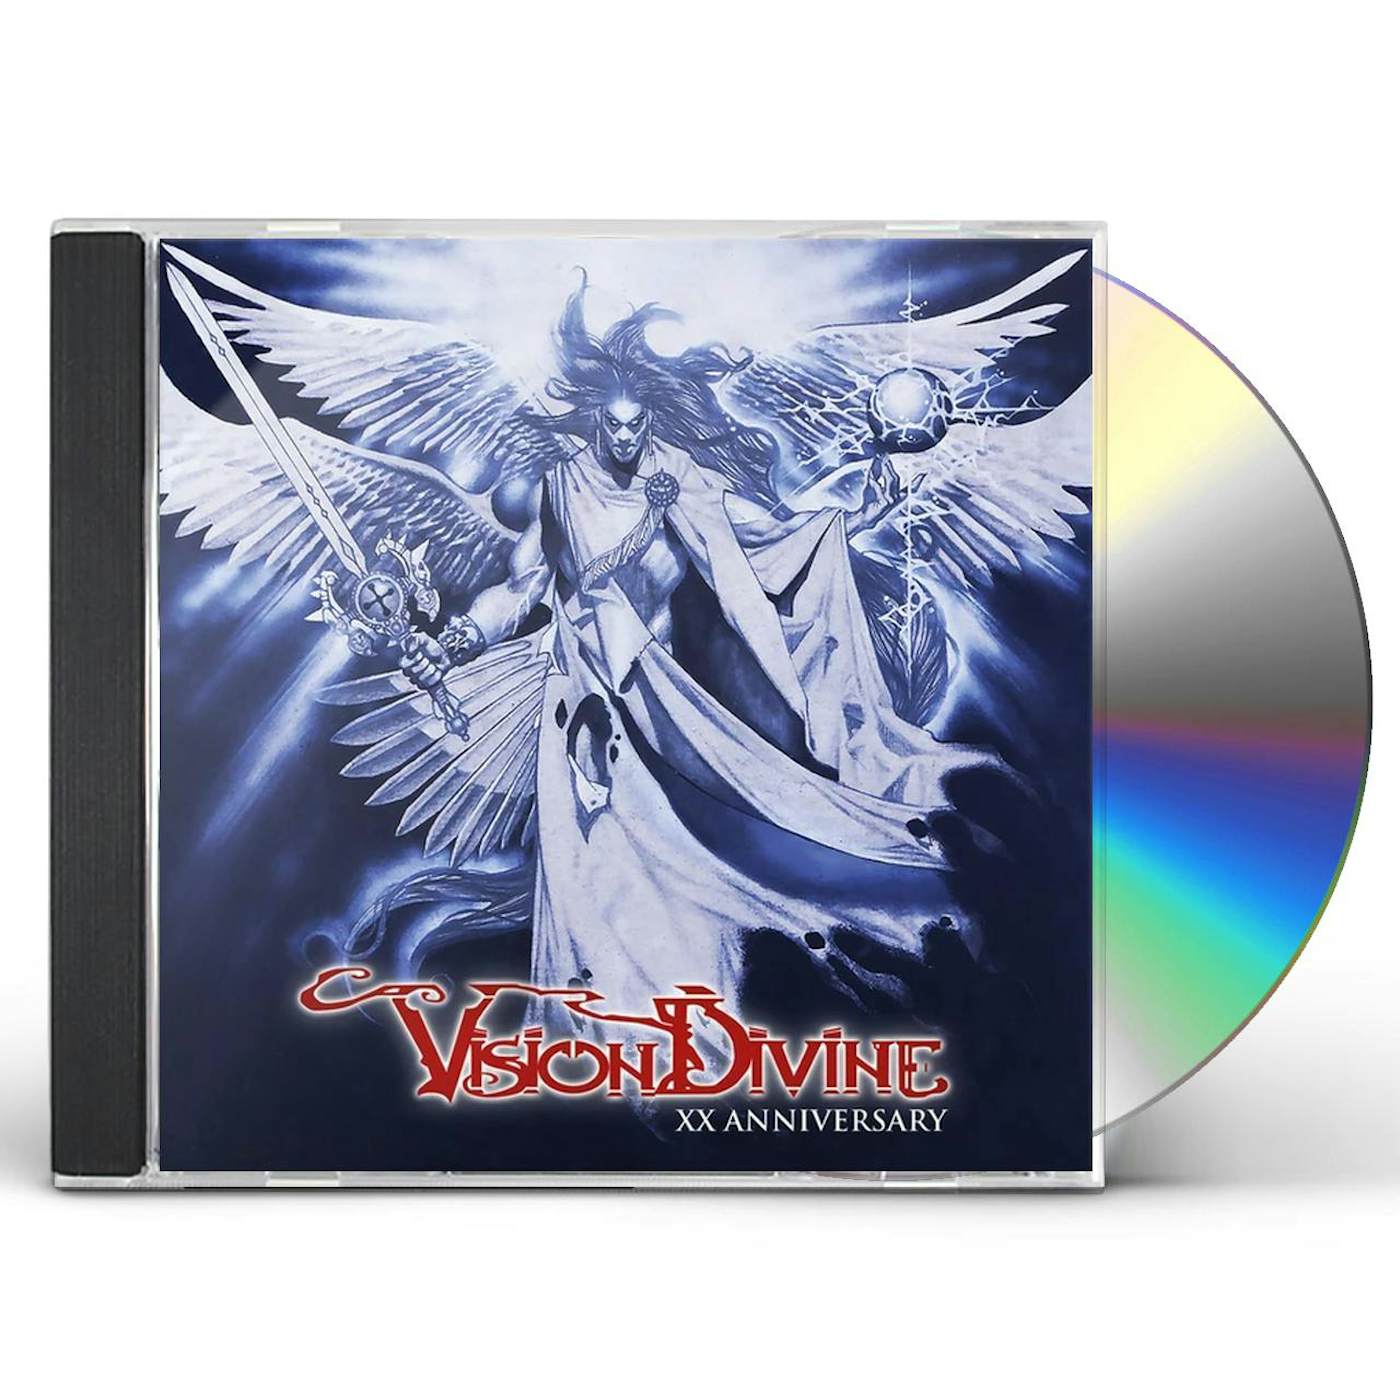 VISION DIVINE (XX ANNIVERSARY) CD